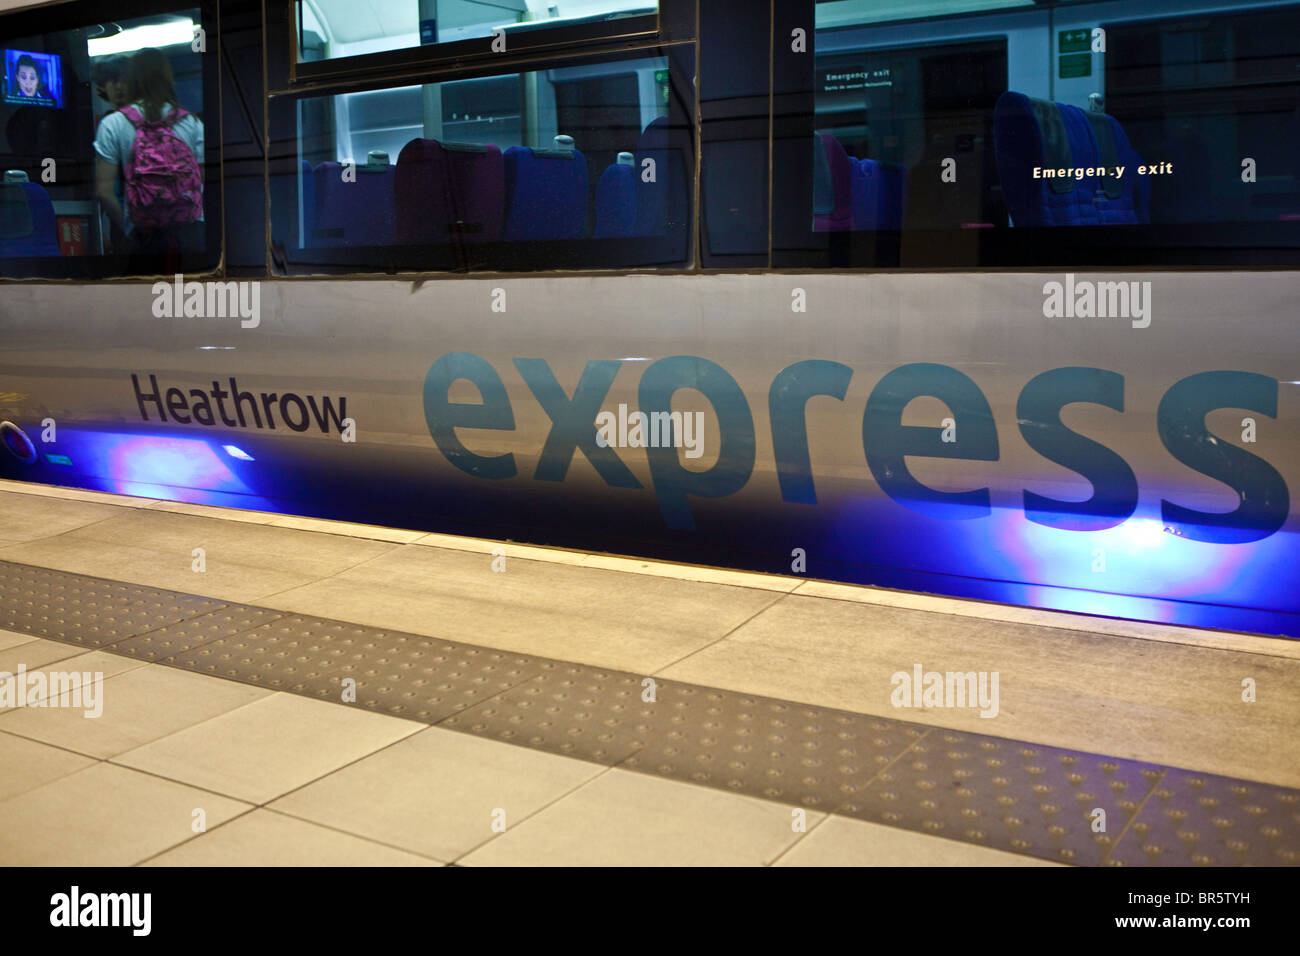 Ein Heathrow Express Zug am London Heathrow Airport Terminal 5 Bahnhof. Stockfoto